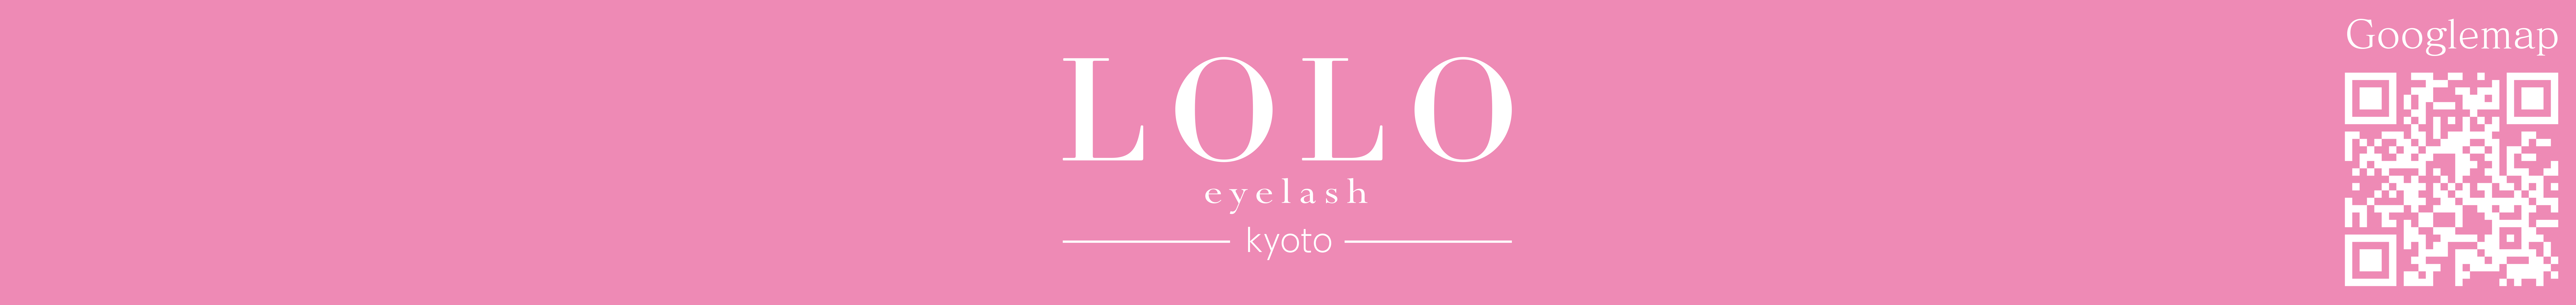 LOLO eyelash kyoto logo